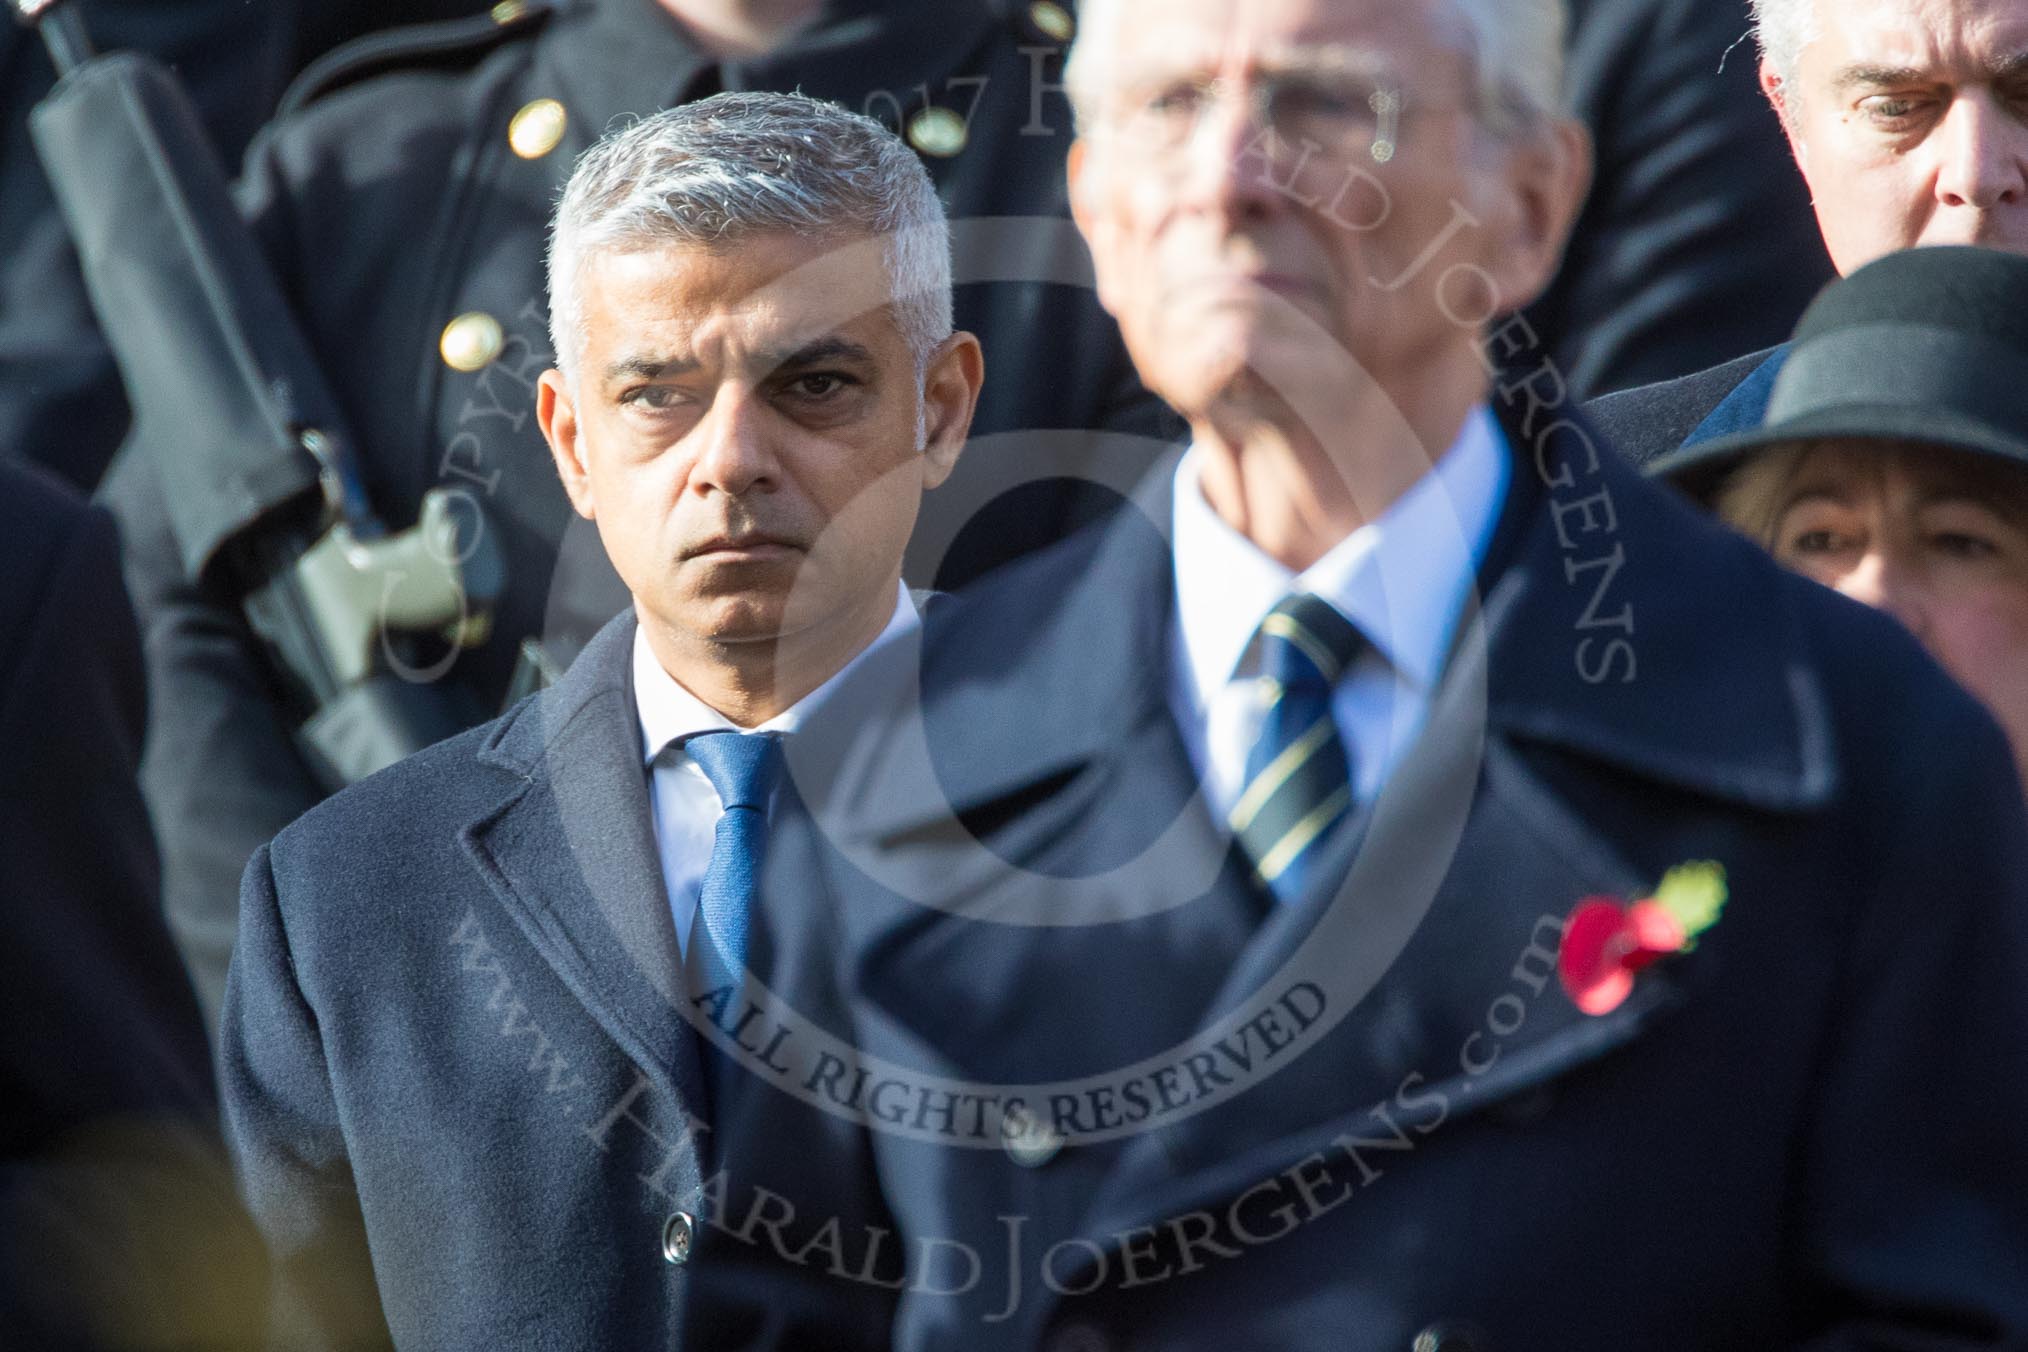 Mr Sadiq Khan (Mayor of London) during the Remembrance Sunday Cenotaph Ceremony 2018 at Horse Guards Parade, Westminster, London, 11 November 2018, 10:57.